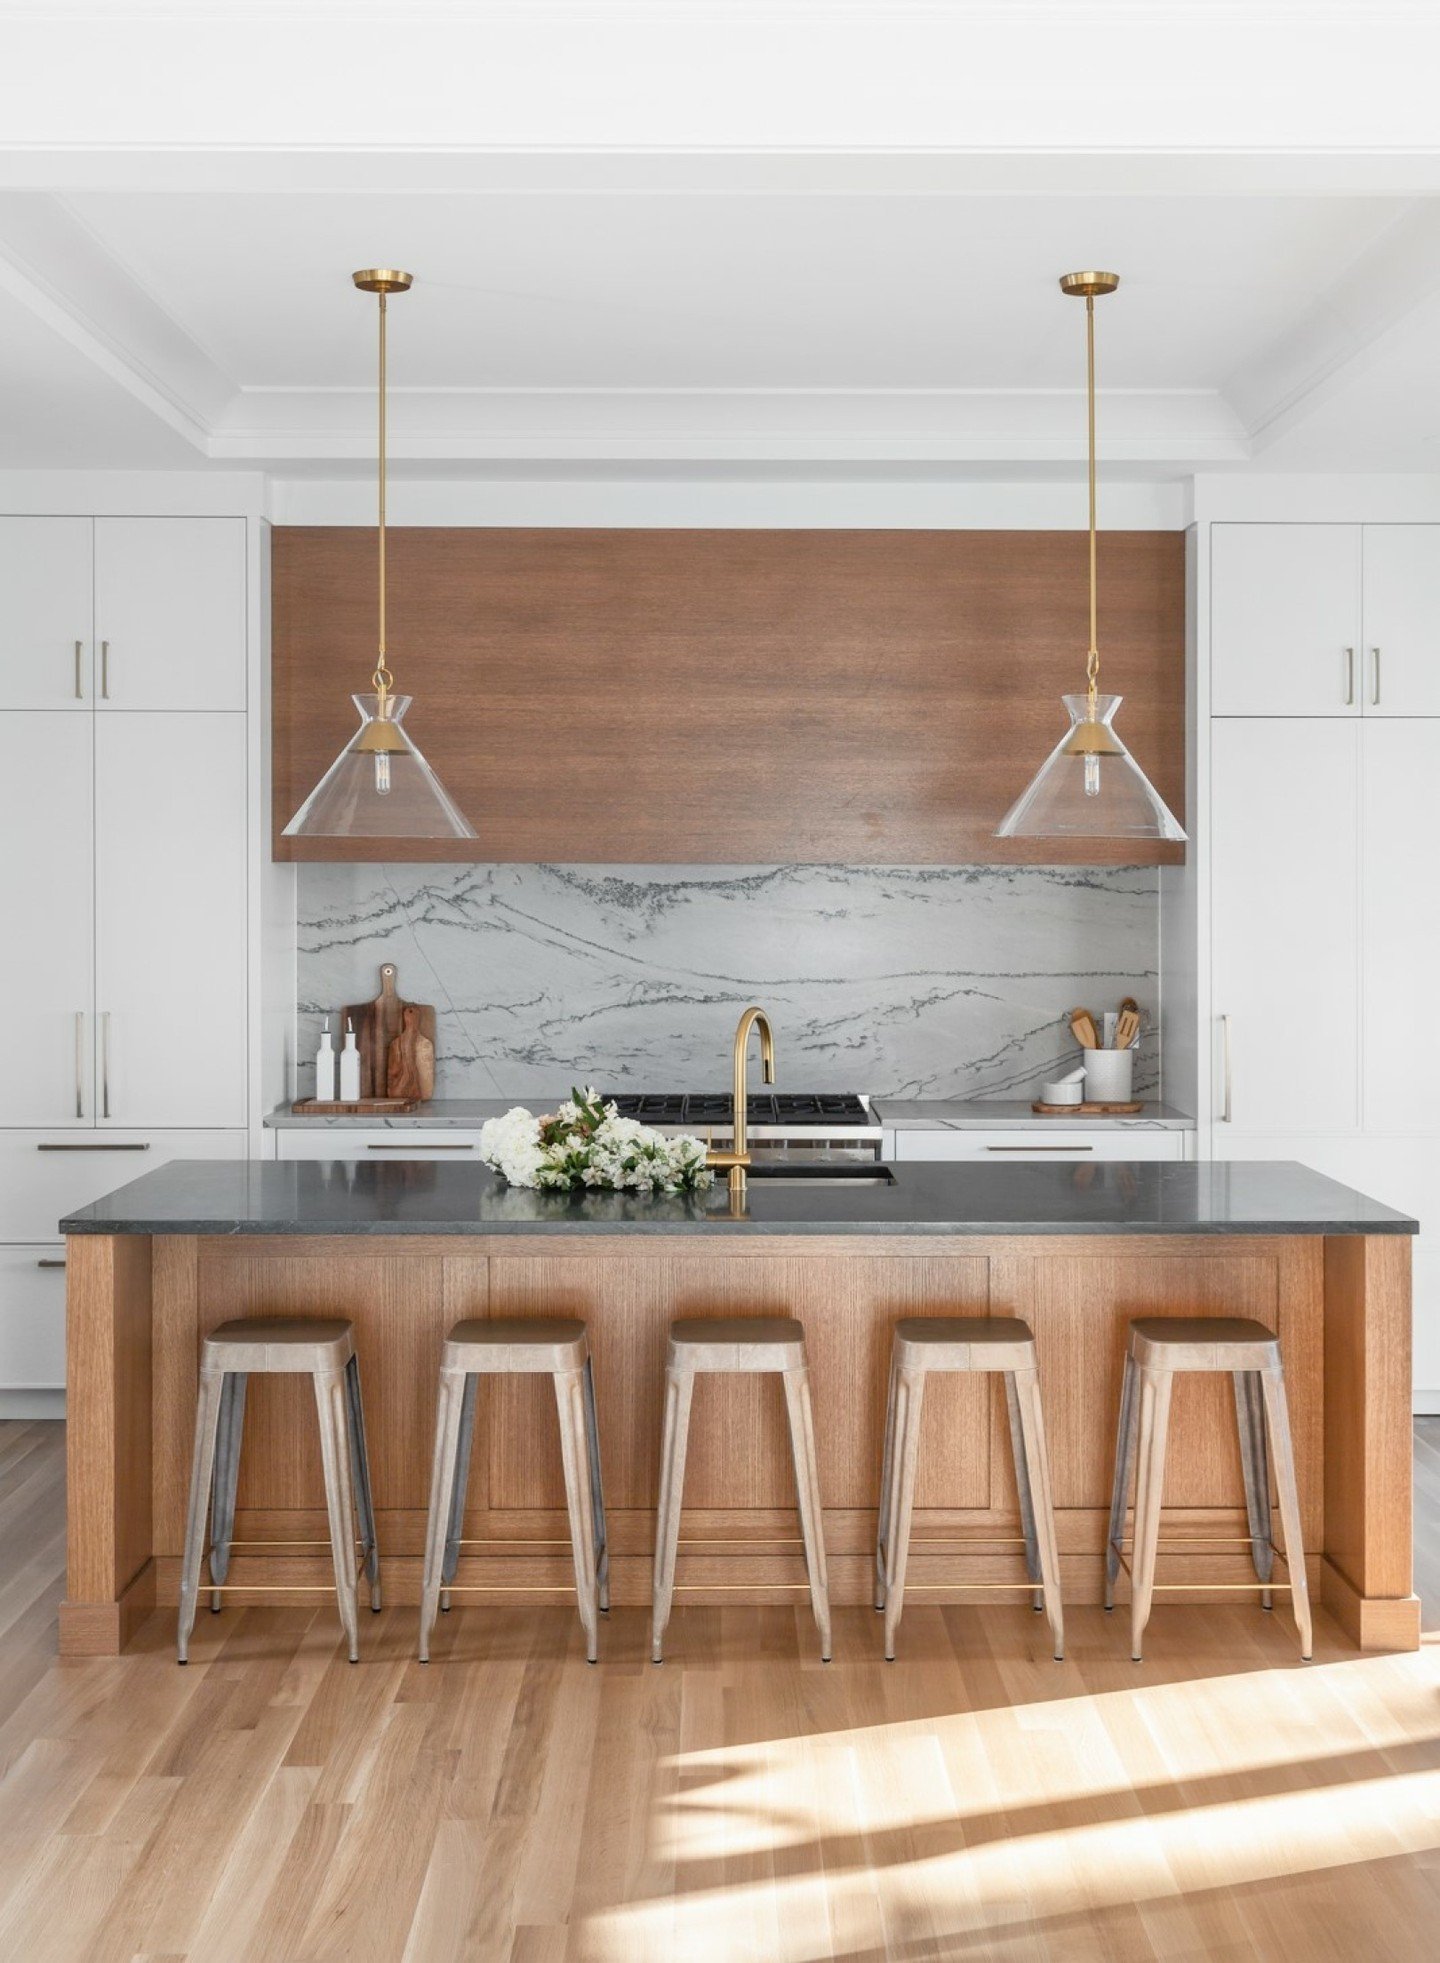 #IHStAndrewsHeights kitchen shot by our friend @philcrozier 😍

Interiors: @in.house.design
Architecture: @mcdowelldesign
Builder: @dreamridgehomes